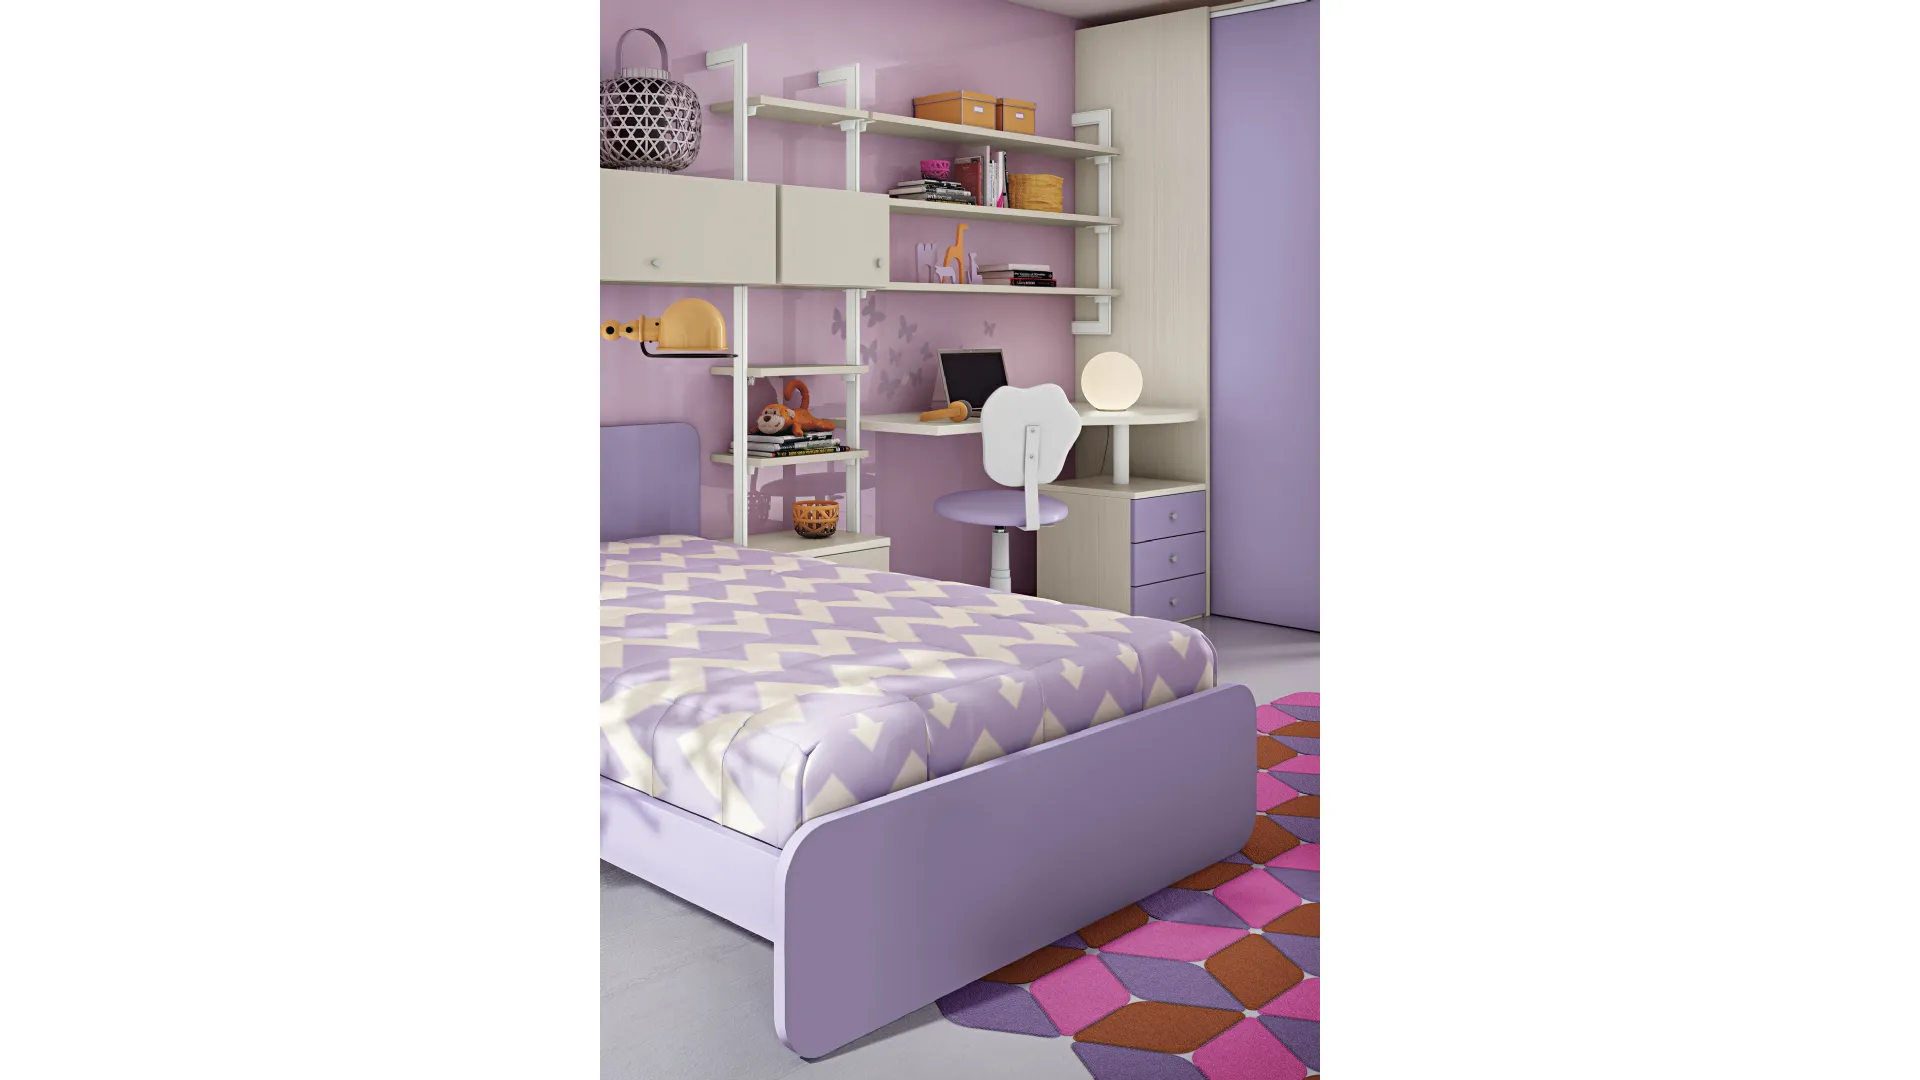 Colorful bedroom for children